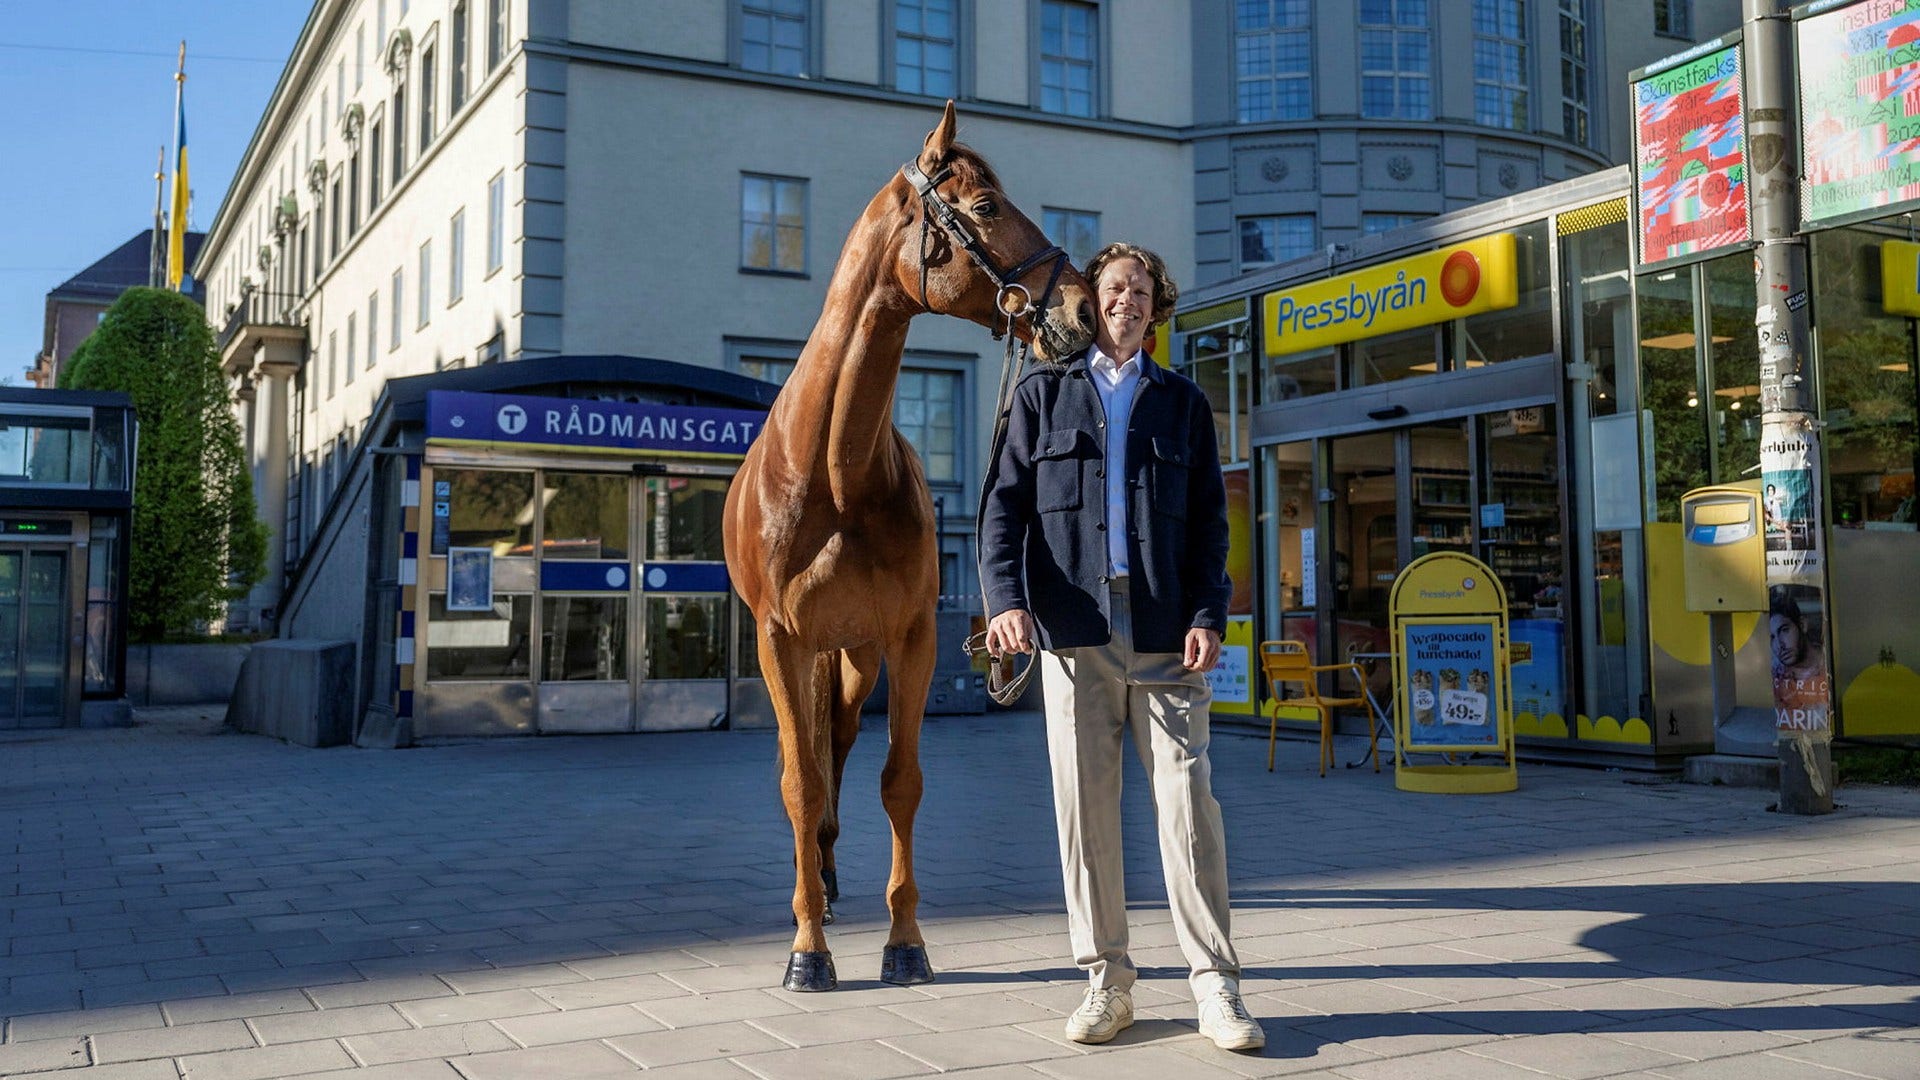 Svennerstål 更换了马鞍 – 在开始骑马生涯之前选择了 Handels